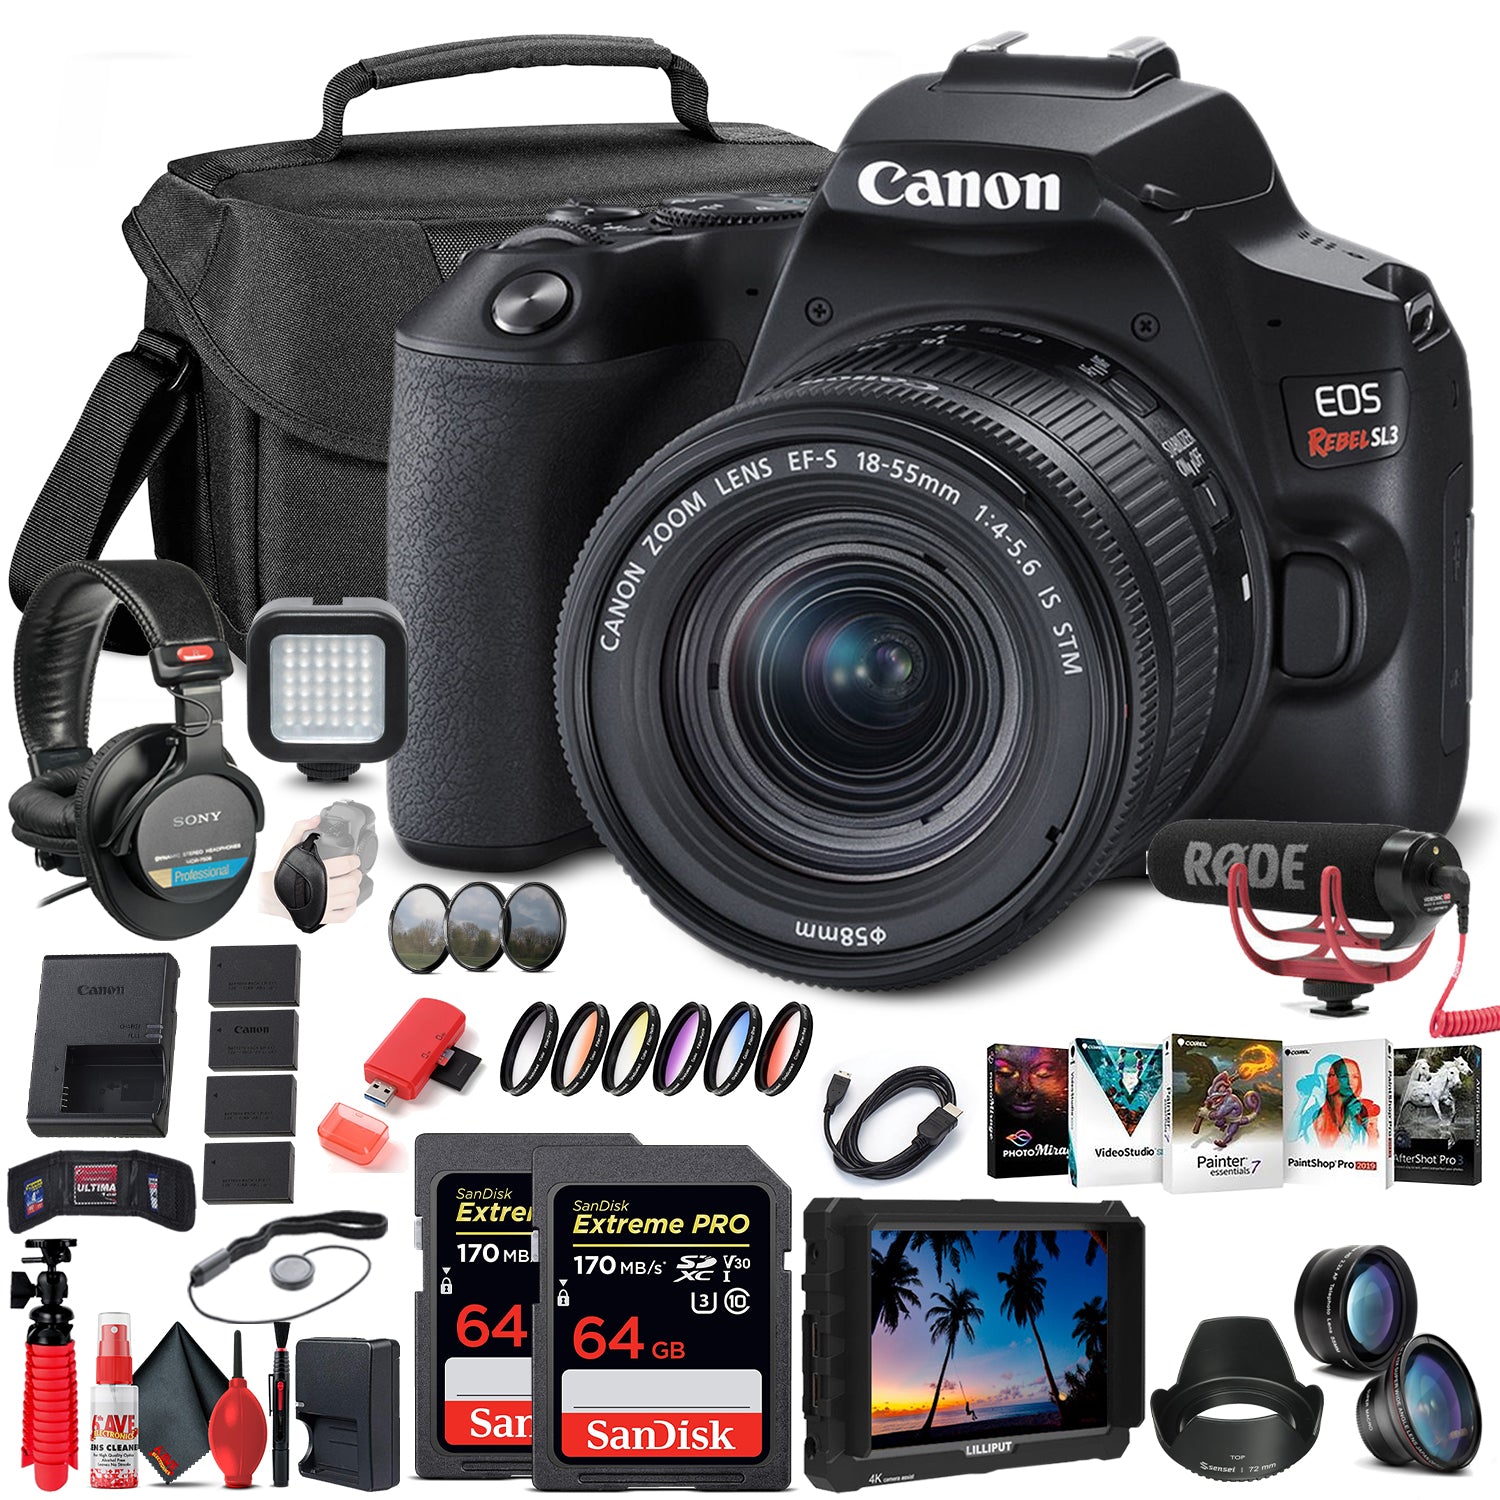 Canon EOS Rebel SL3 DSLR Camera with 18-55mm Lens (Black) (3453C002) Extra Storage Bundle